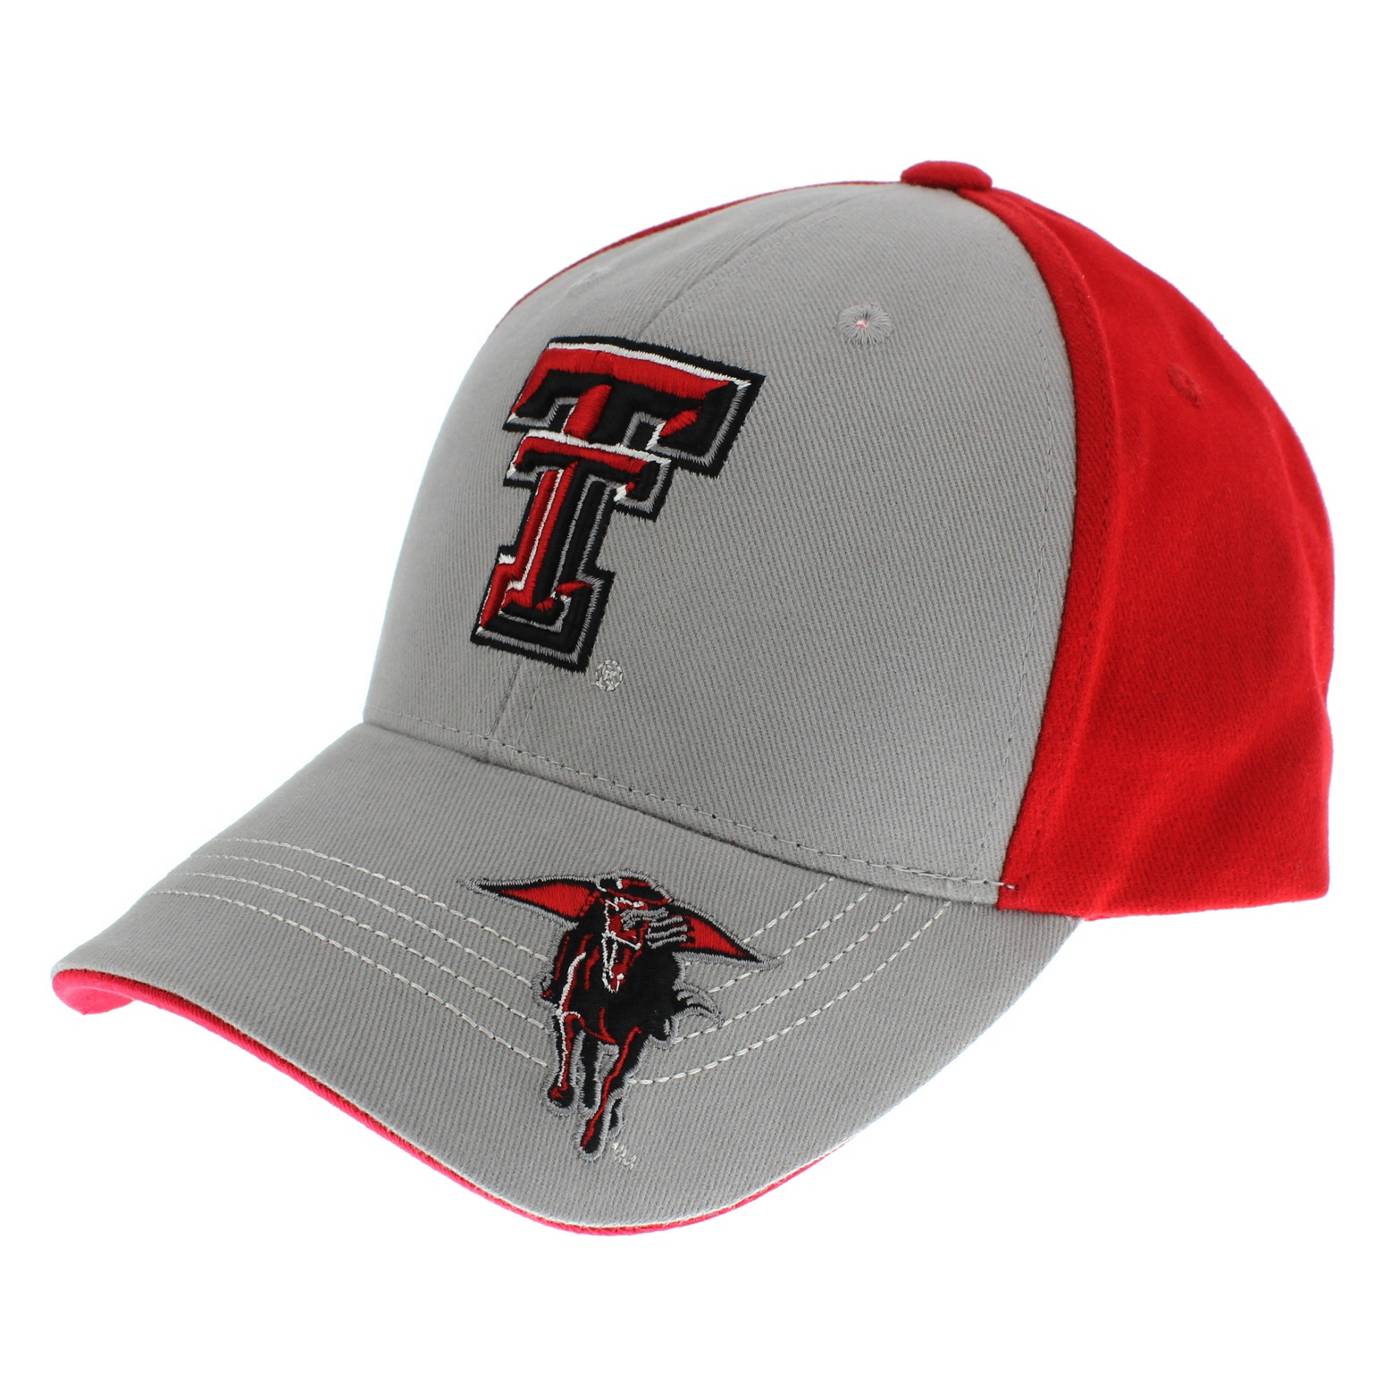 Texas Tech 100% Cotton Adjustable Baseball Cap - Gray/Red; image 1 of 2